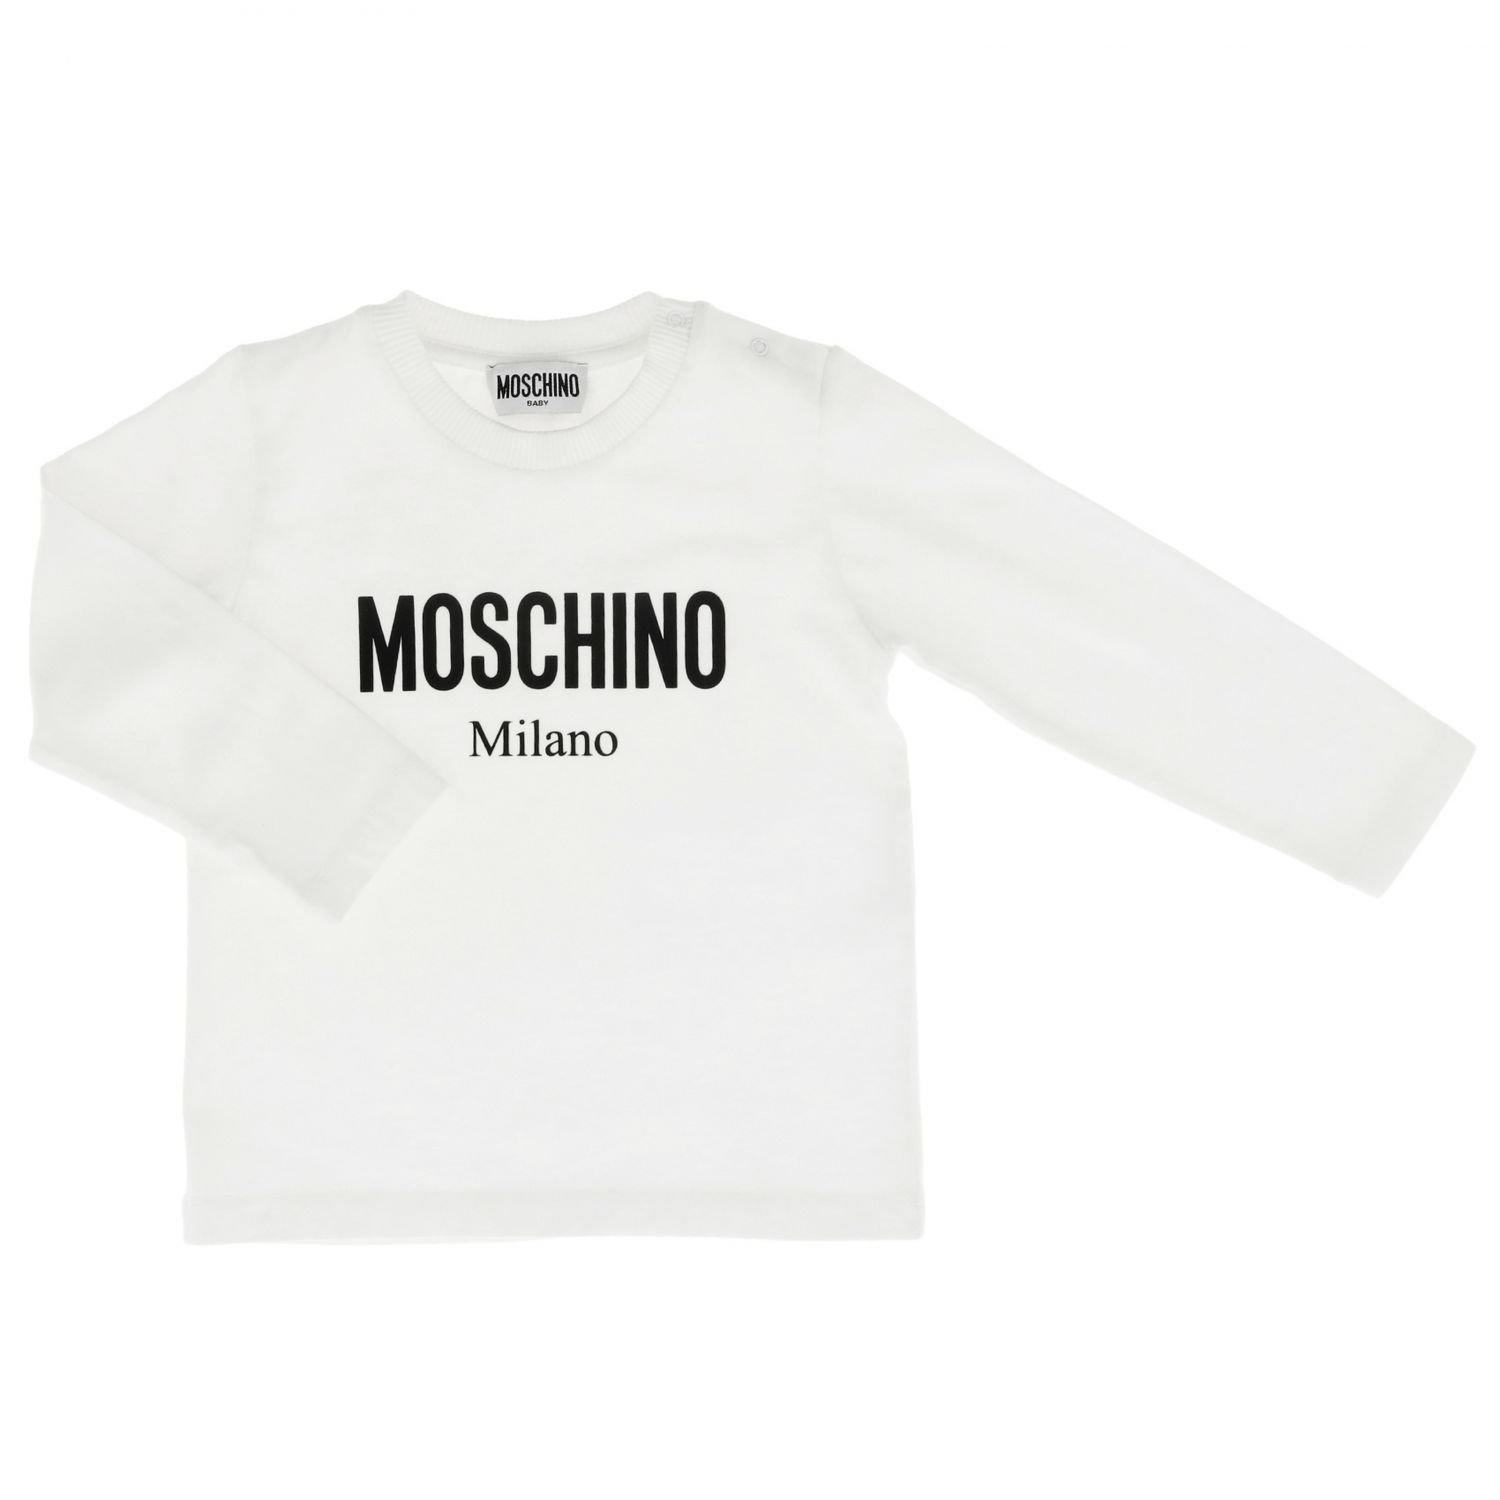 moschino baby boy shirt